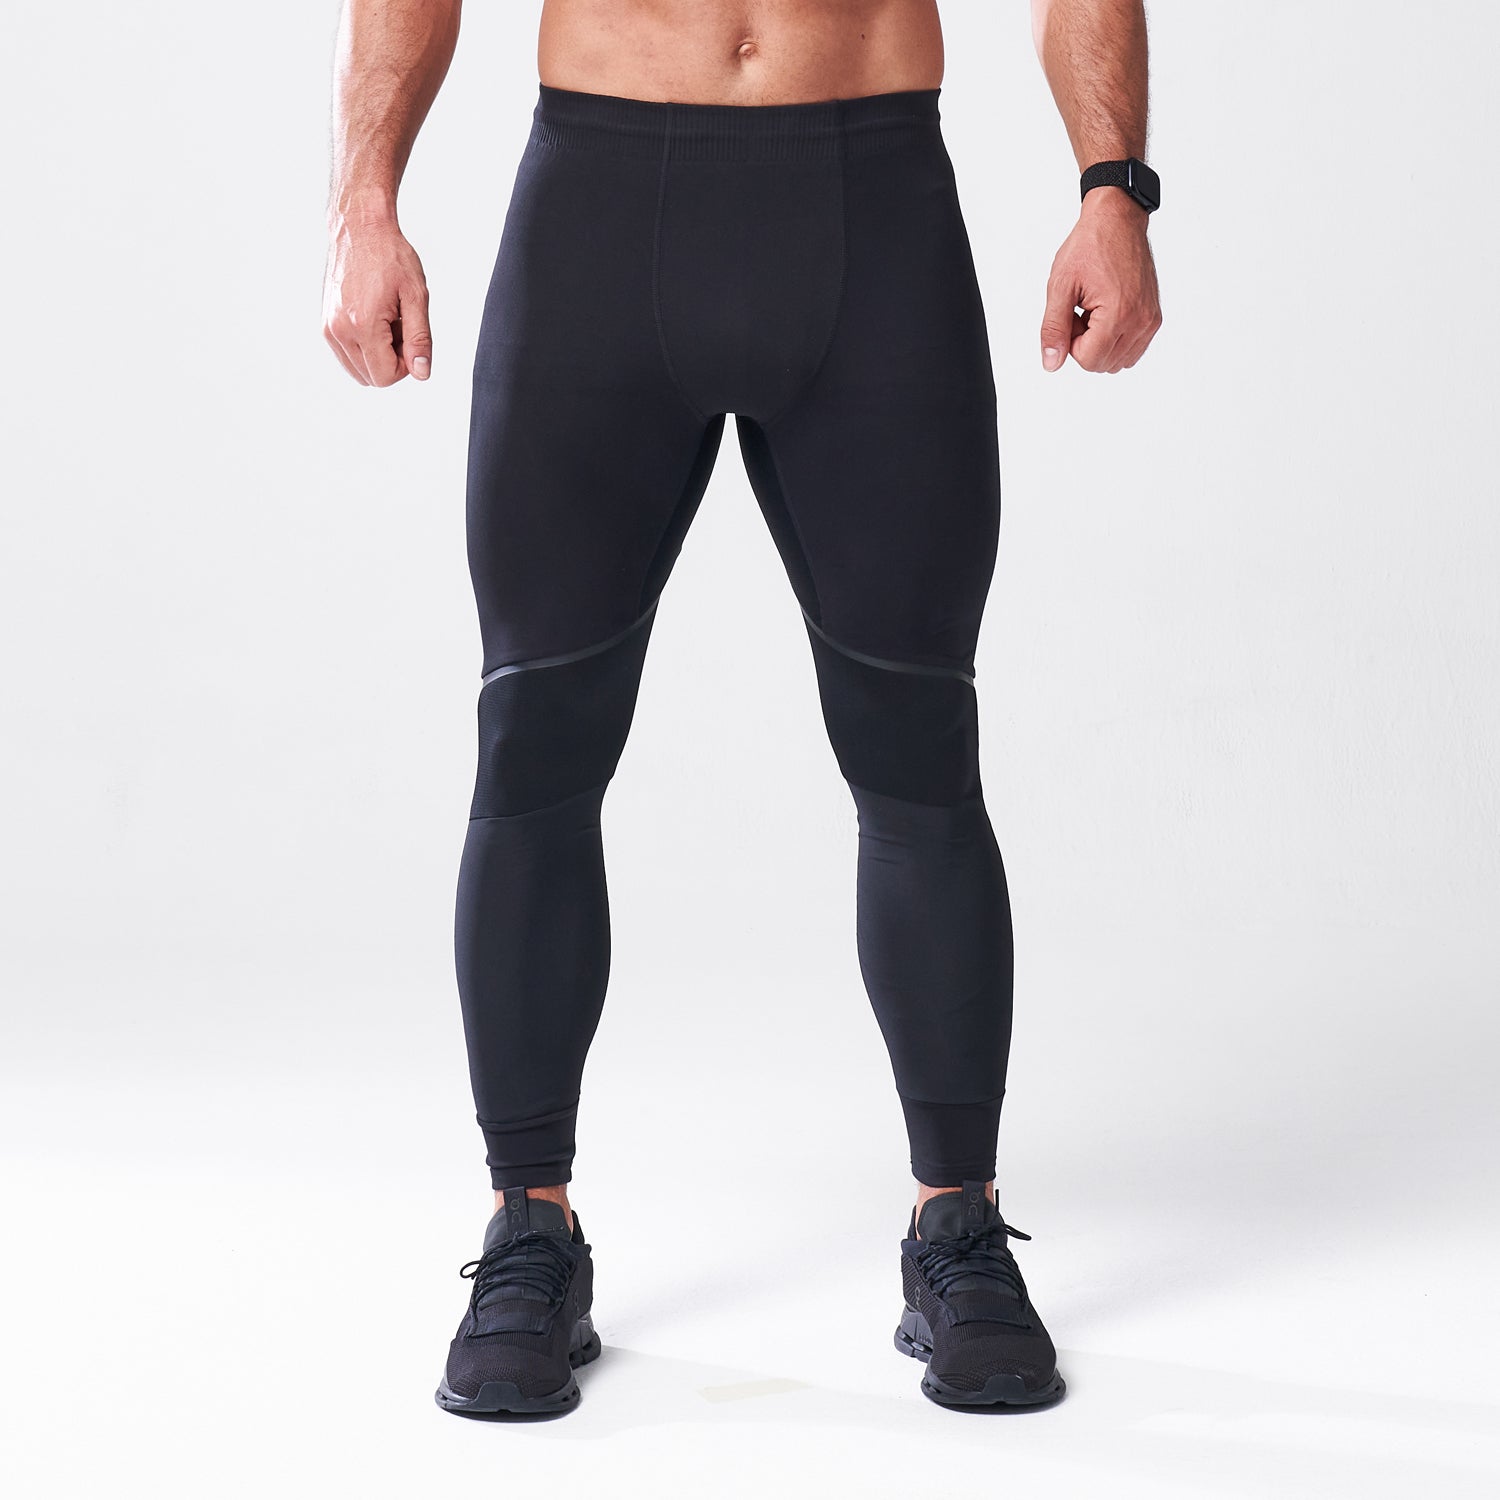 AE, LAB360° 5'' Impact Shorts - Black, Gym Shorts Men